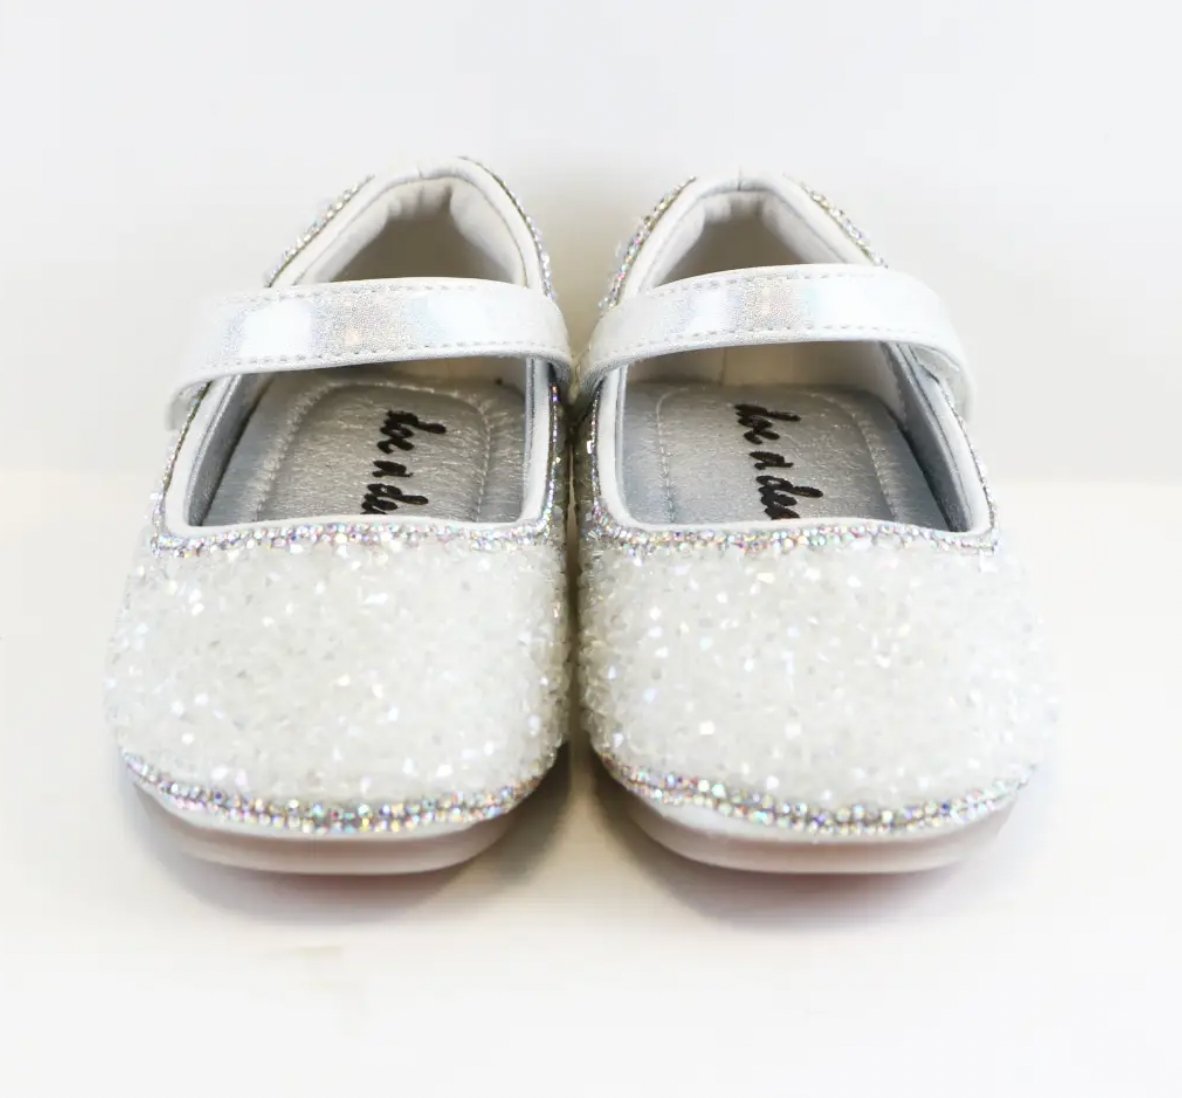 CYNTHIA ROWLEY River Stone Gold Rivet Loafers Flats Womens Shoes Sz 8  ❤️sj17j18 | eBay